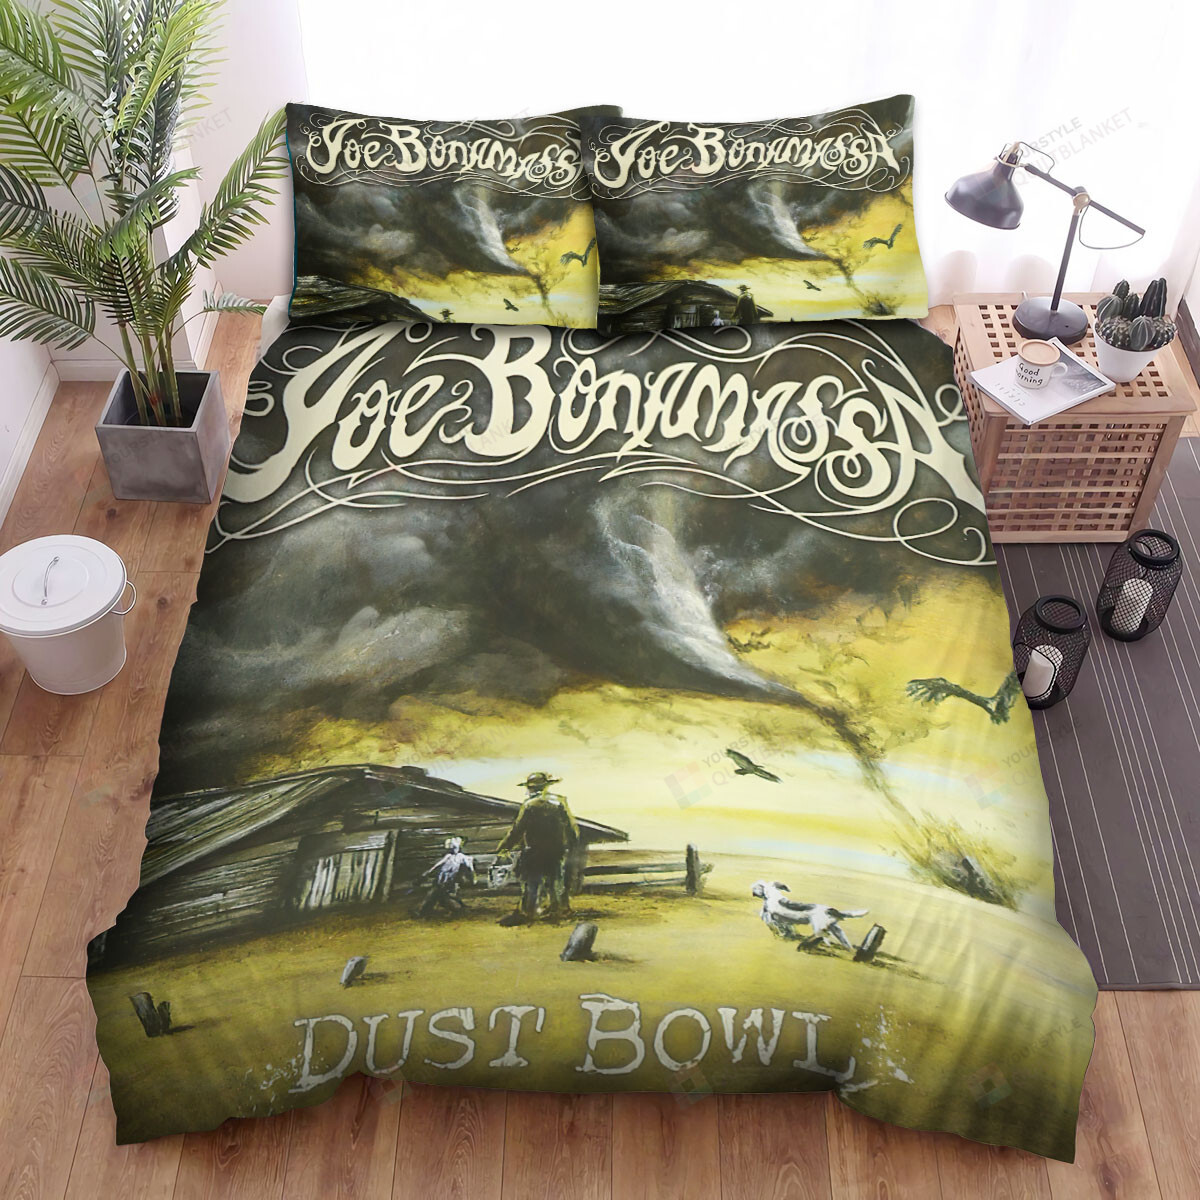 Musician Guitarist Joe Bonamassa Dust Bowl Cover Bed Sheets Spread Comforter Duvet Cover Bedding Sets